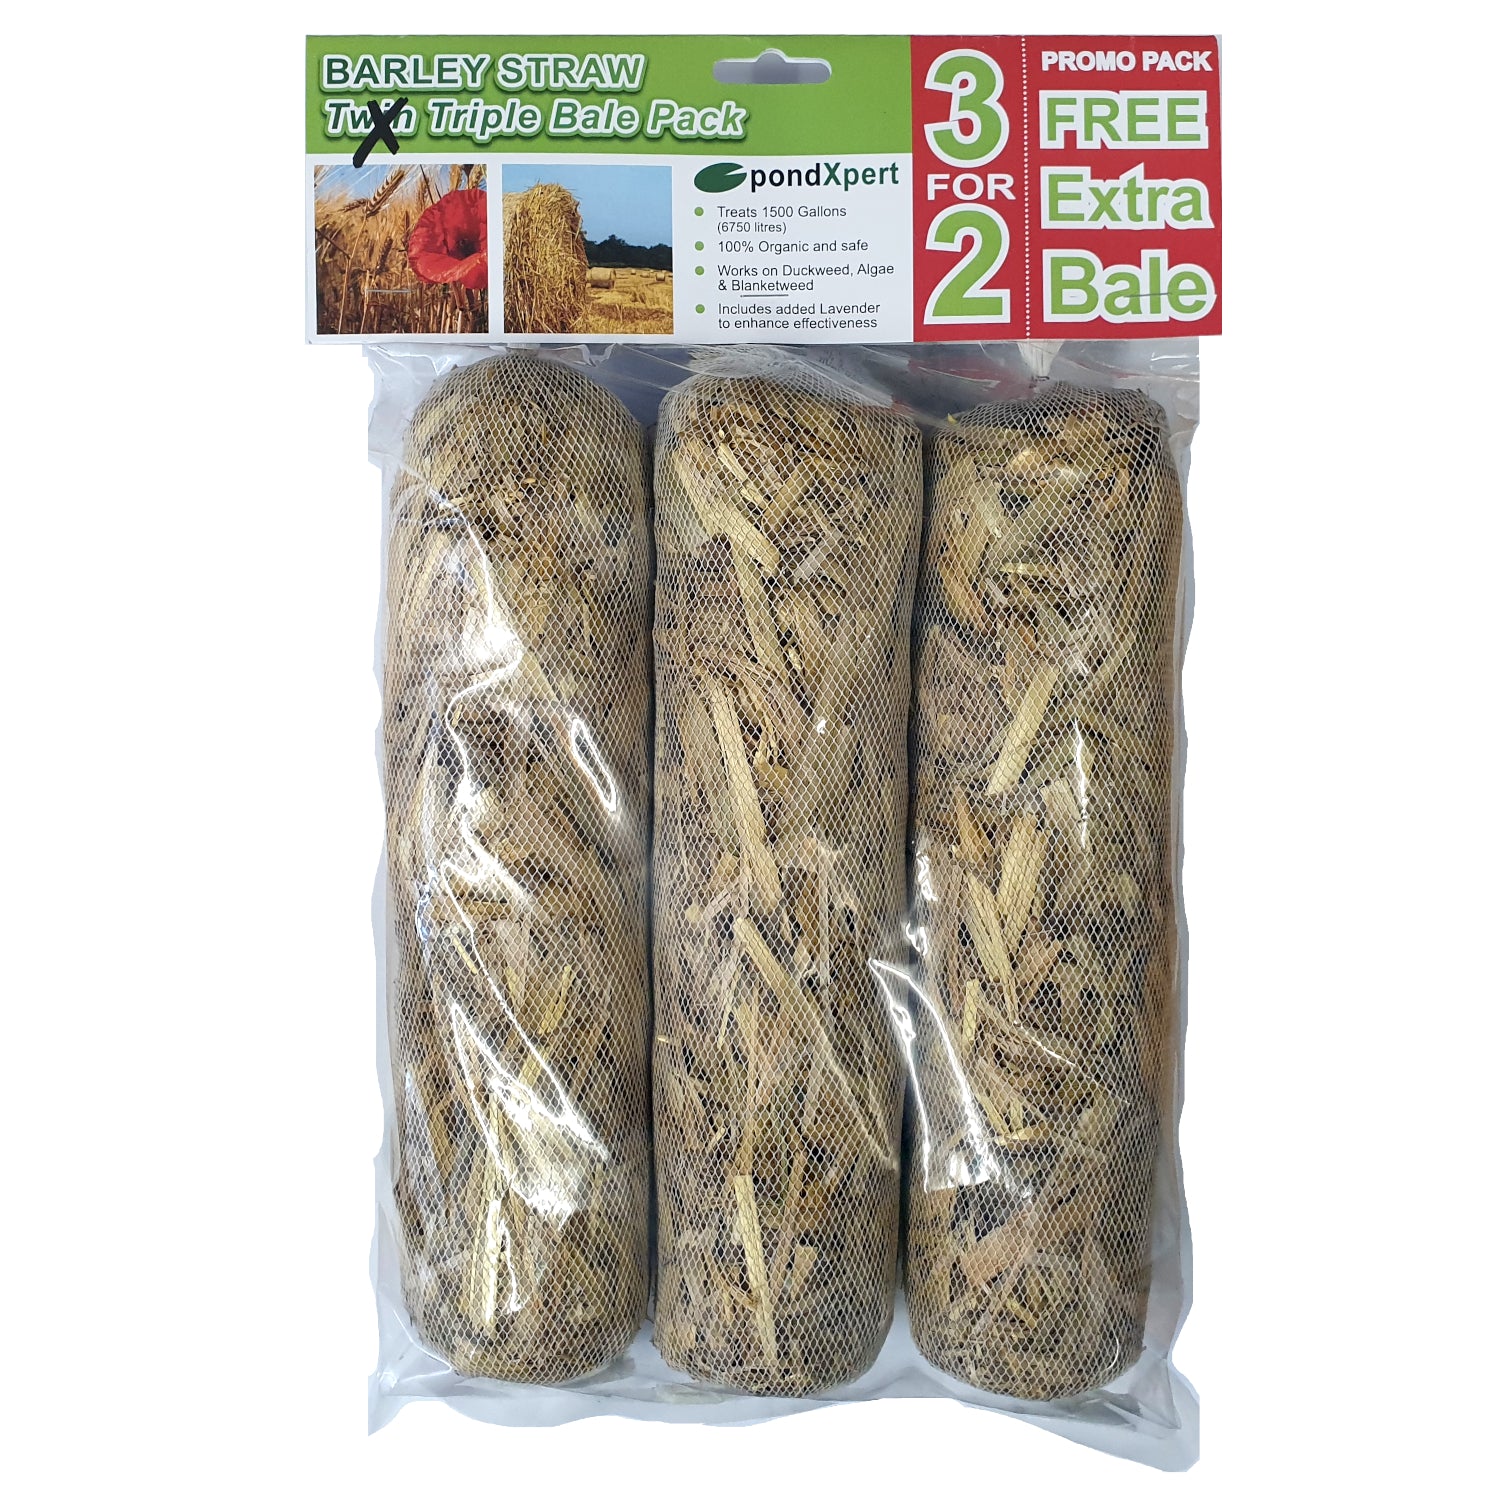 PondXpert Pond Barley Straw Bales (3 for 2) treats 6750L